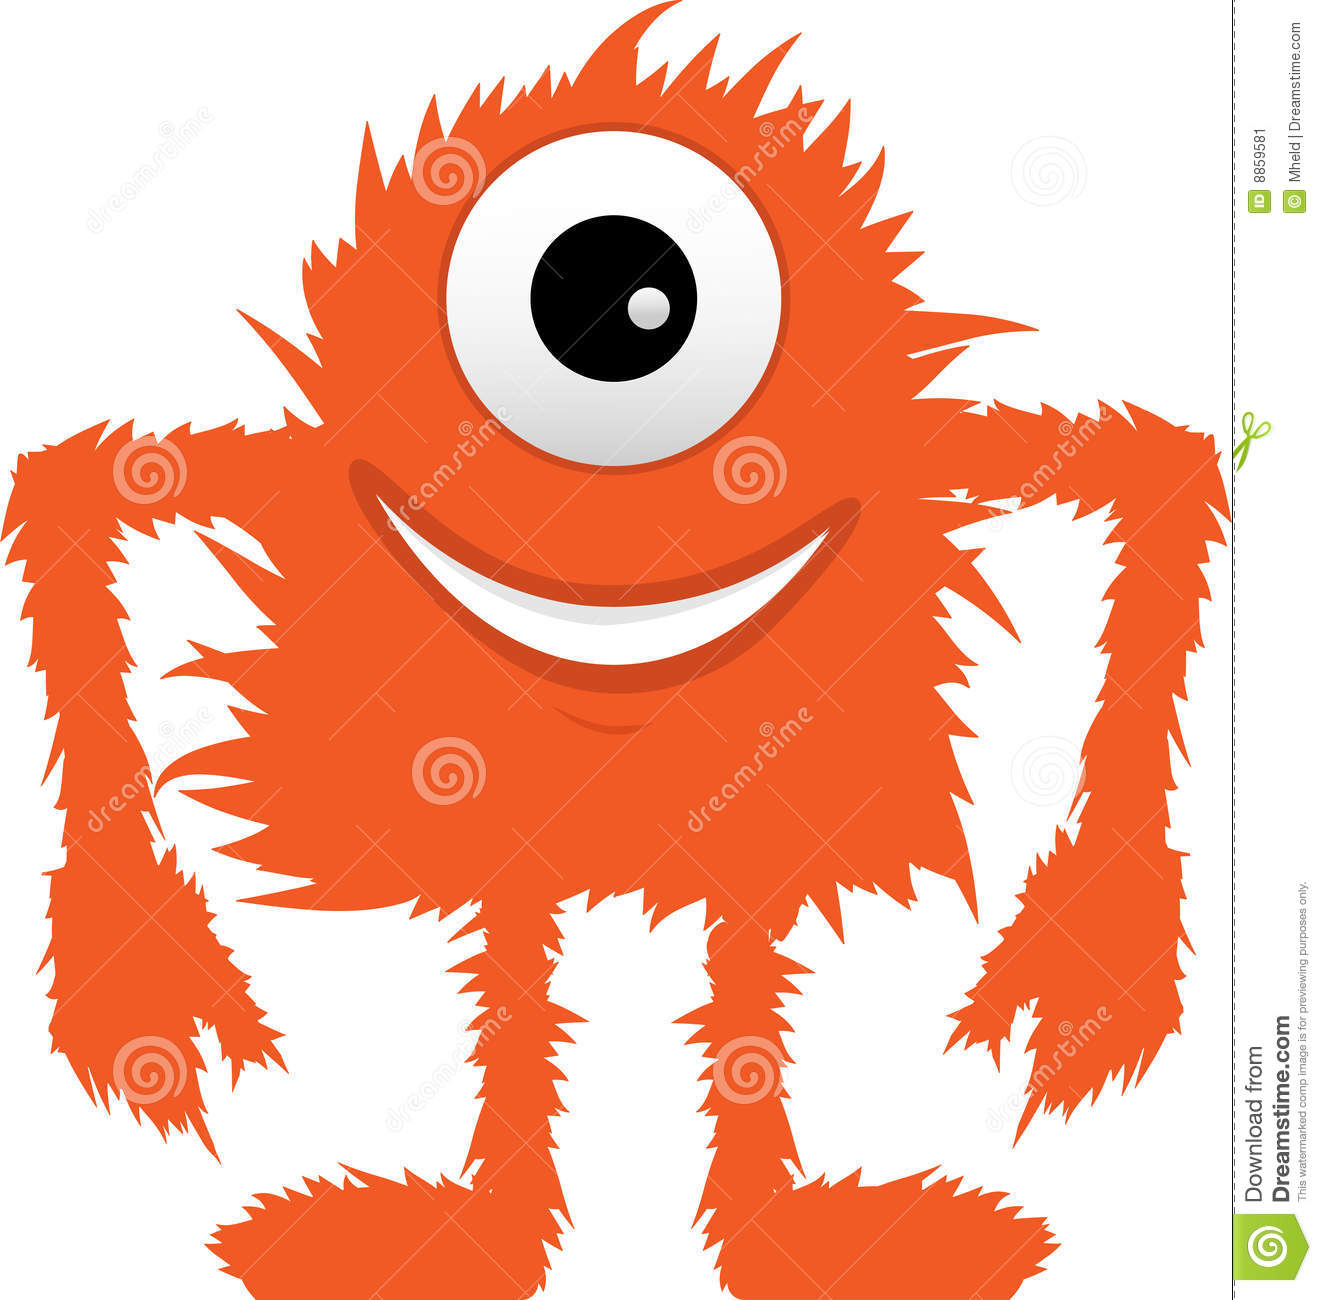 More Similar Stock Images Of   Furry Fuzzy Orange One Eyed Monster